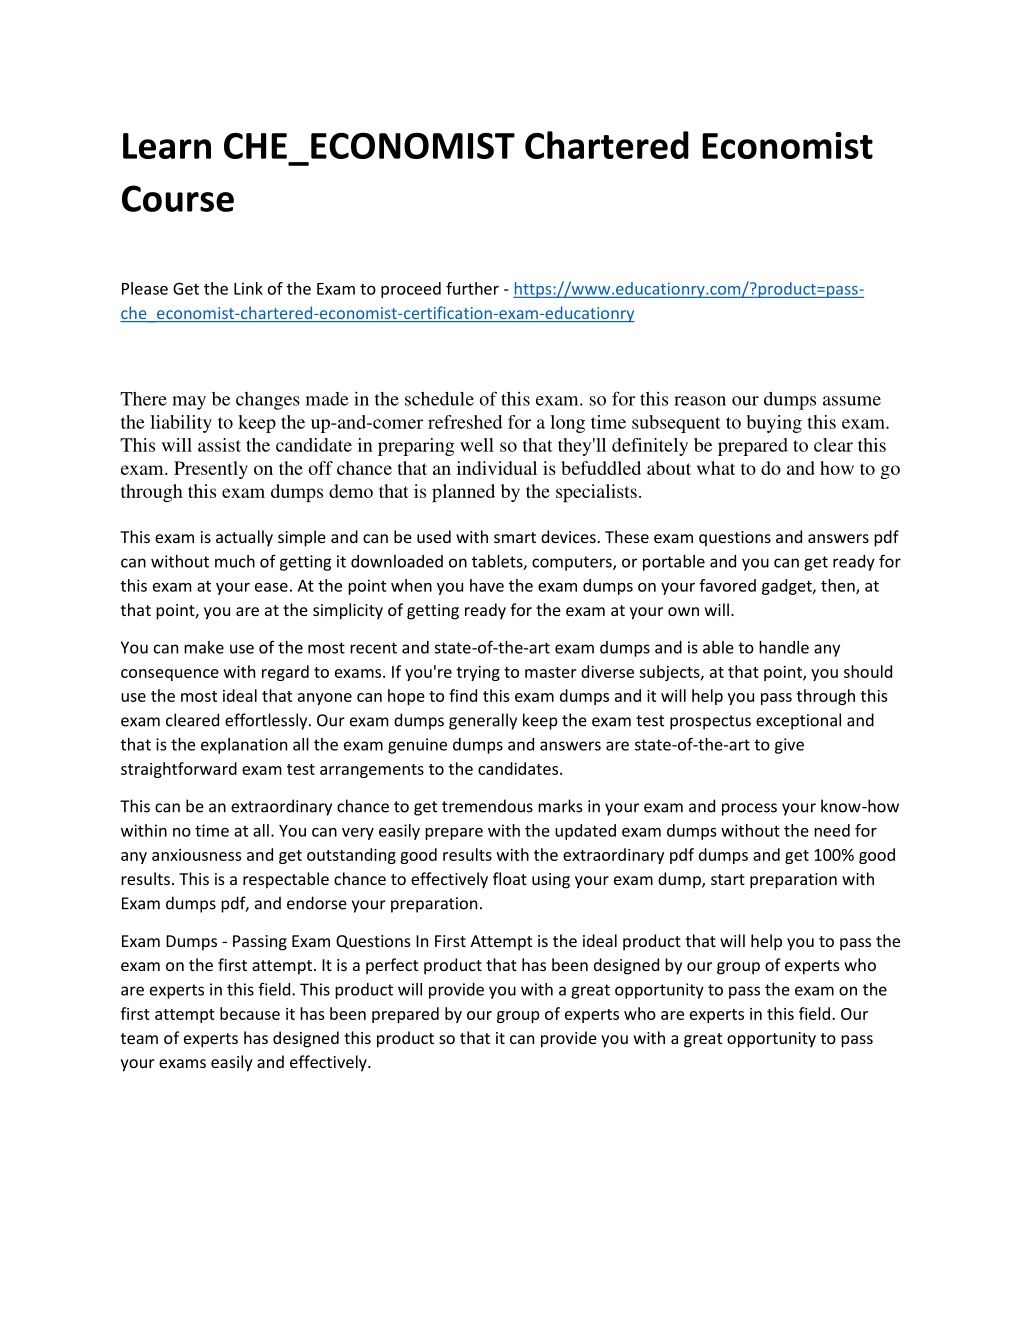 PPT Learn CHE ECONOMIST Chartered Economist Practice Course